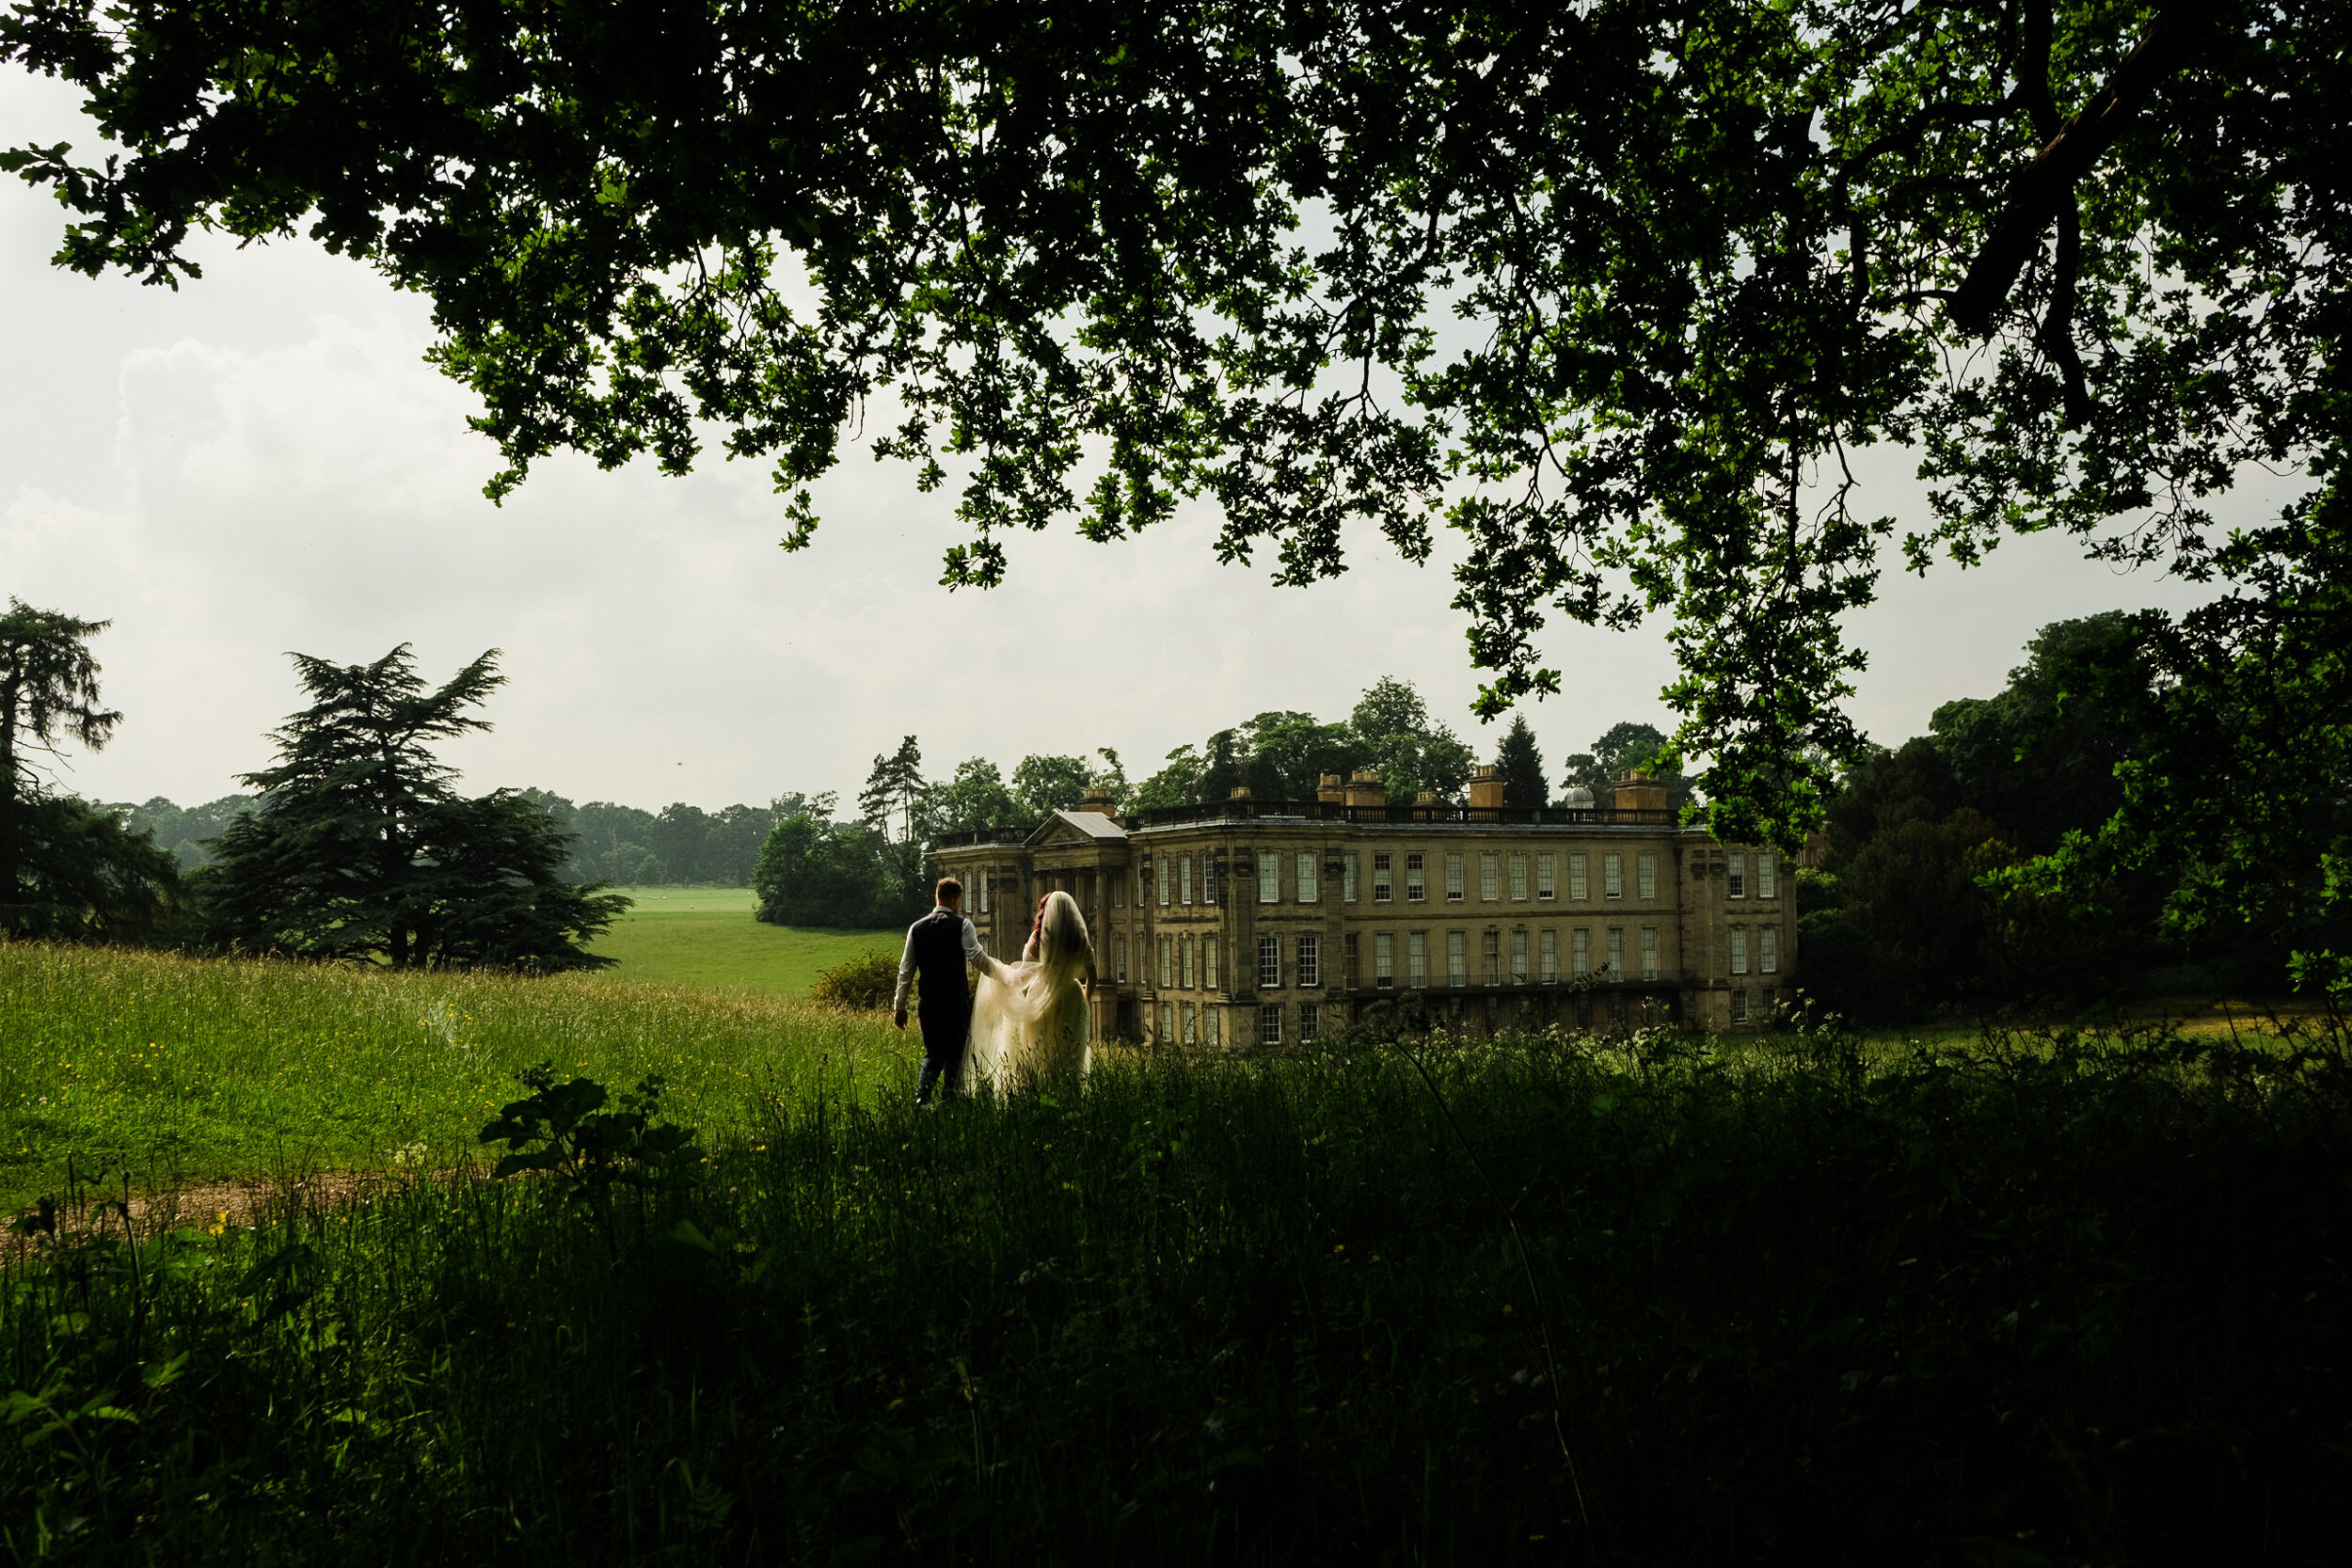 the-riding-school-calke-abbey-derbyshire-edgy-luxury-alternative-documentary-wedding-photographer-2500px_100076.jpg